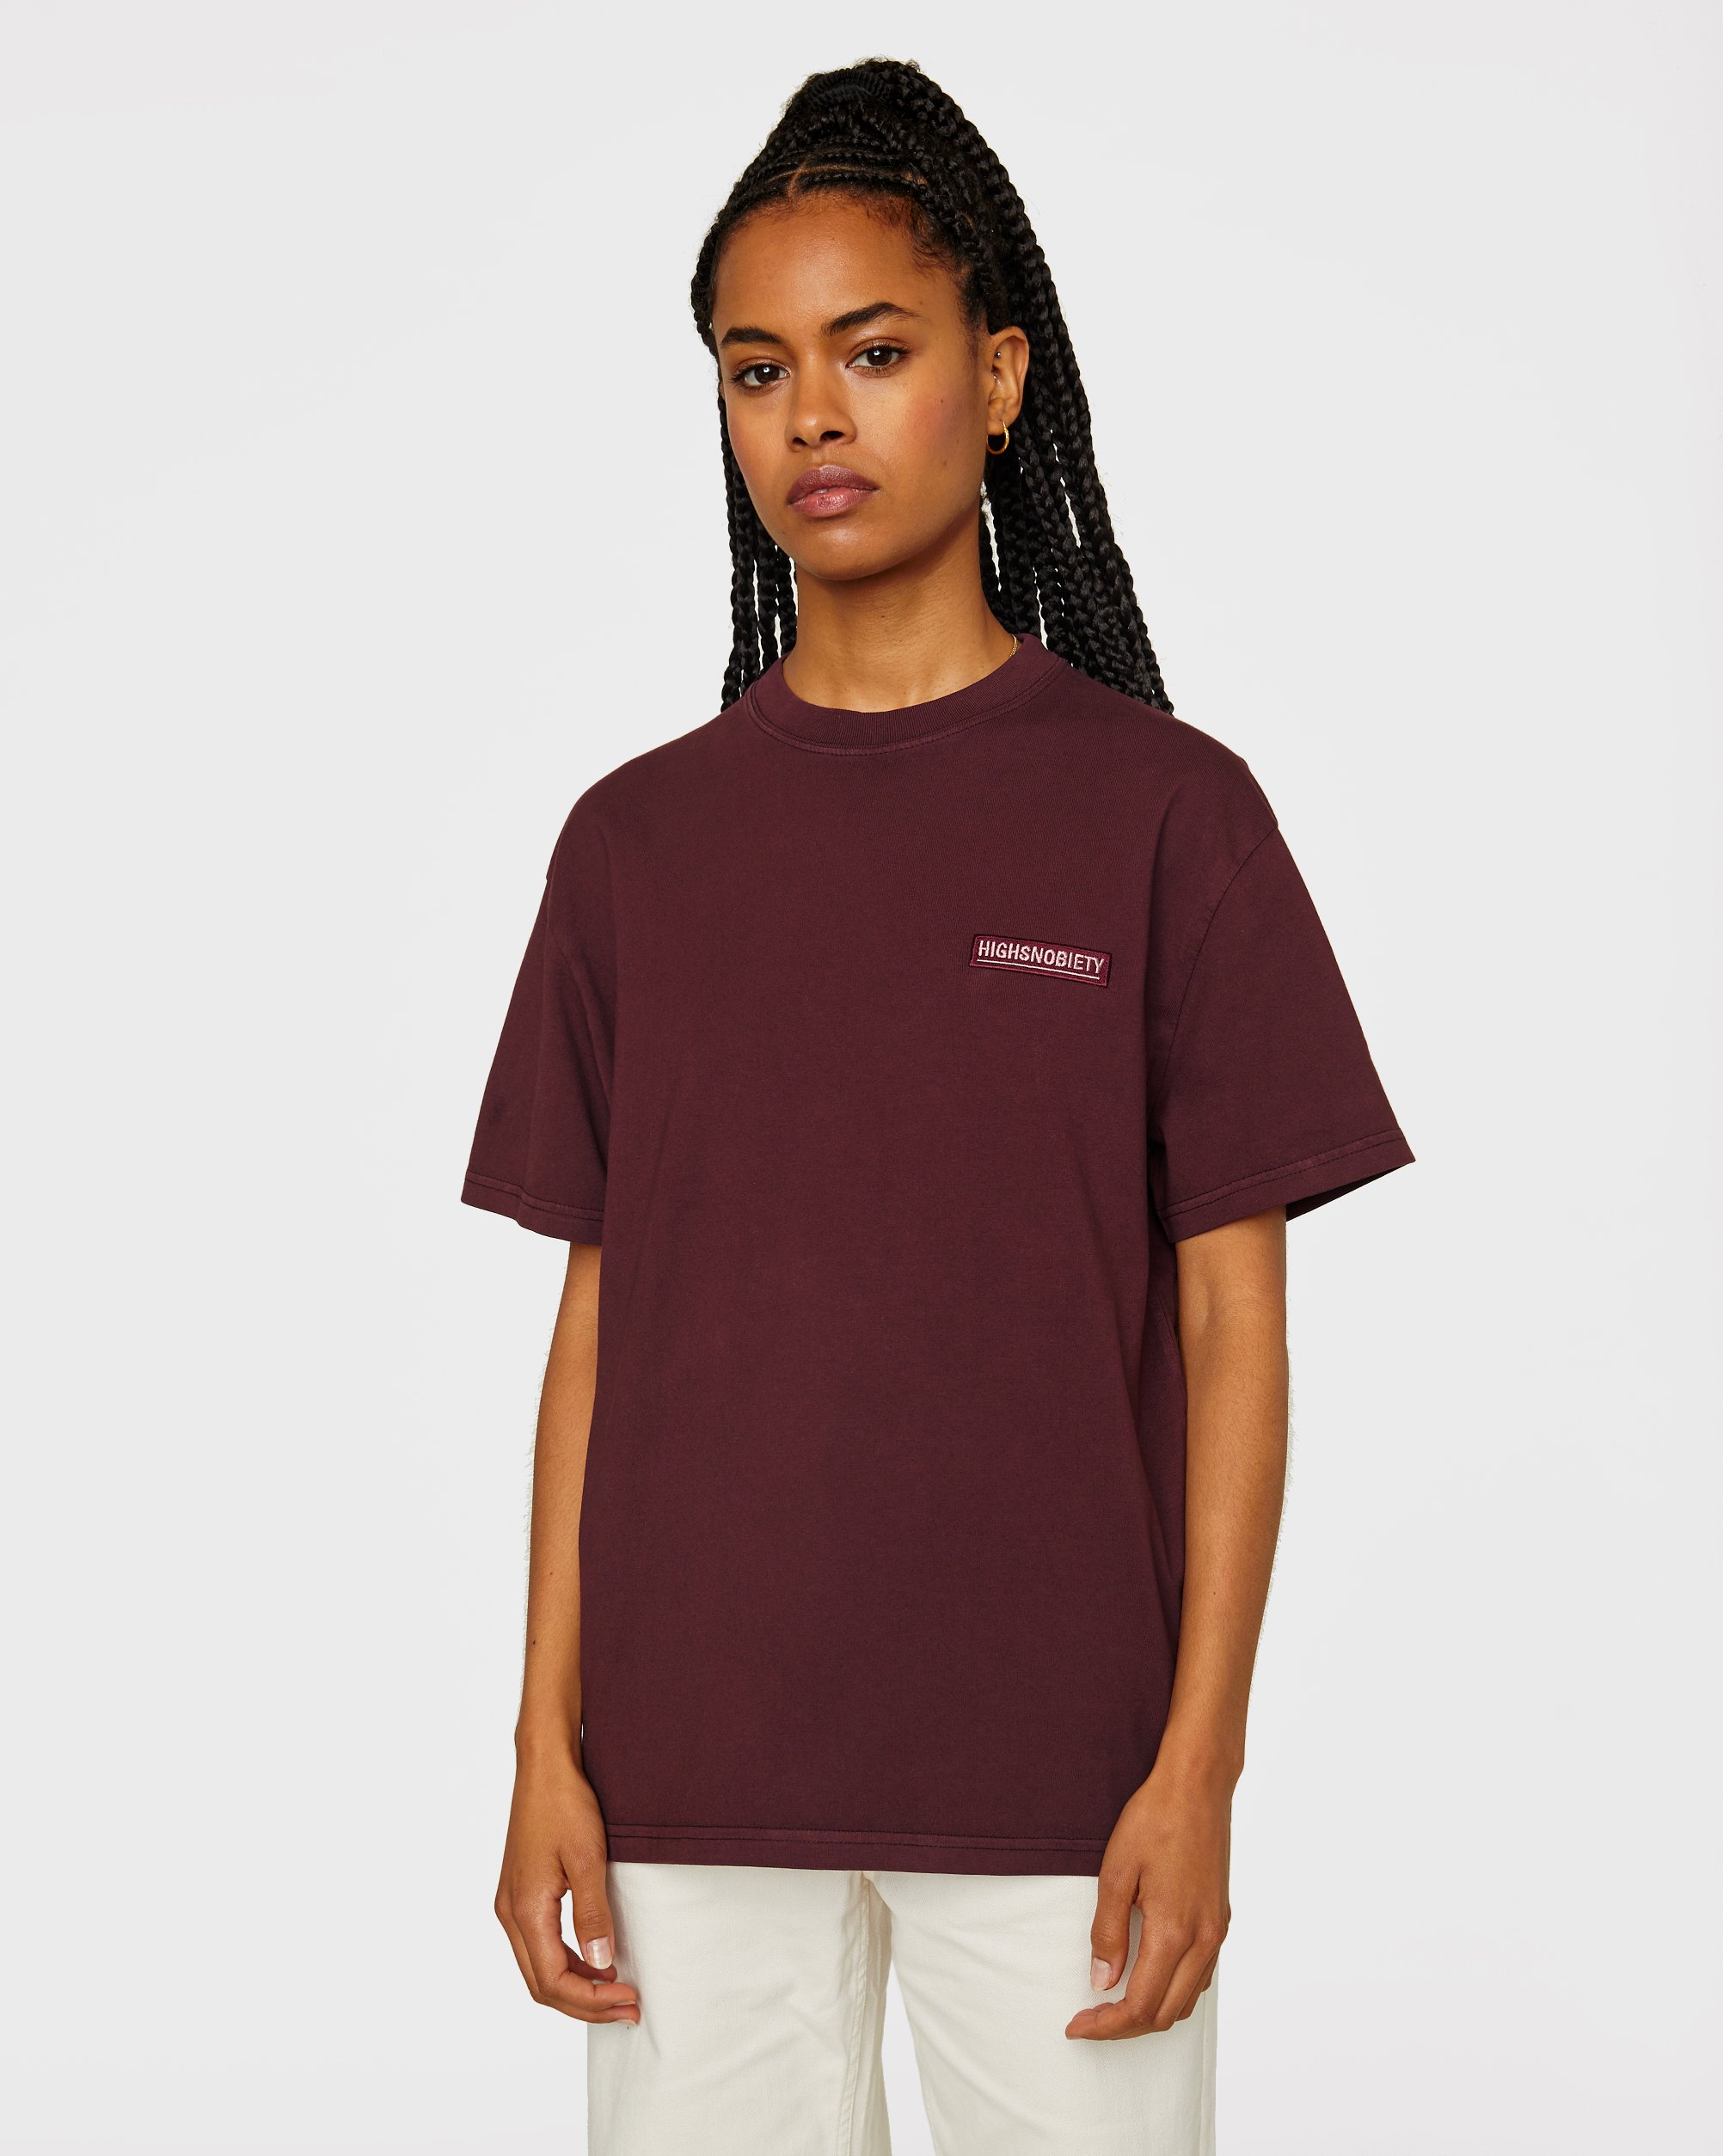 Highsnobiety - Staples T-Shirt Burgundy - Clothing - Red - Image 6